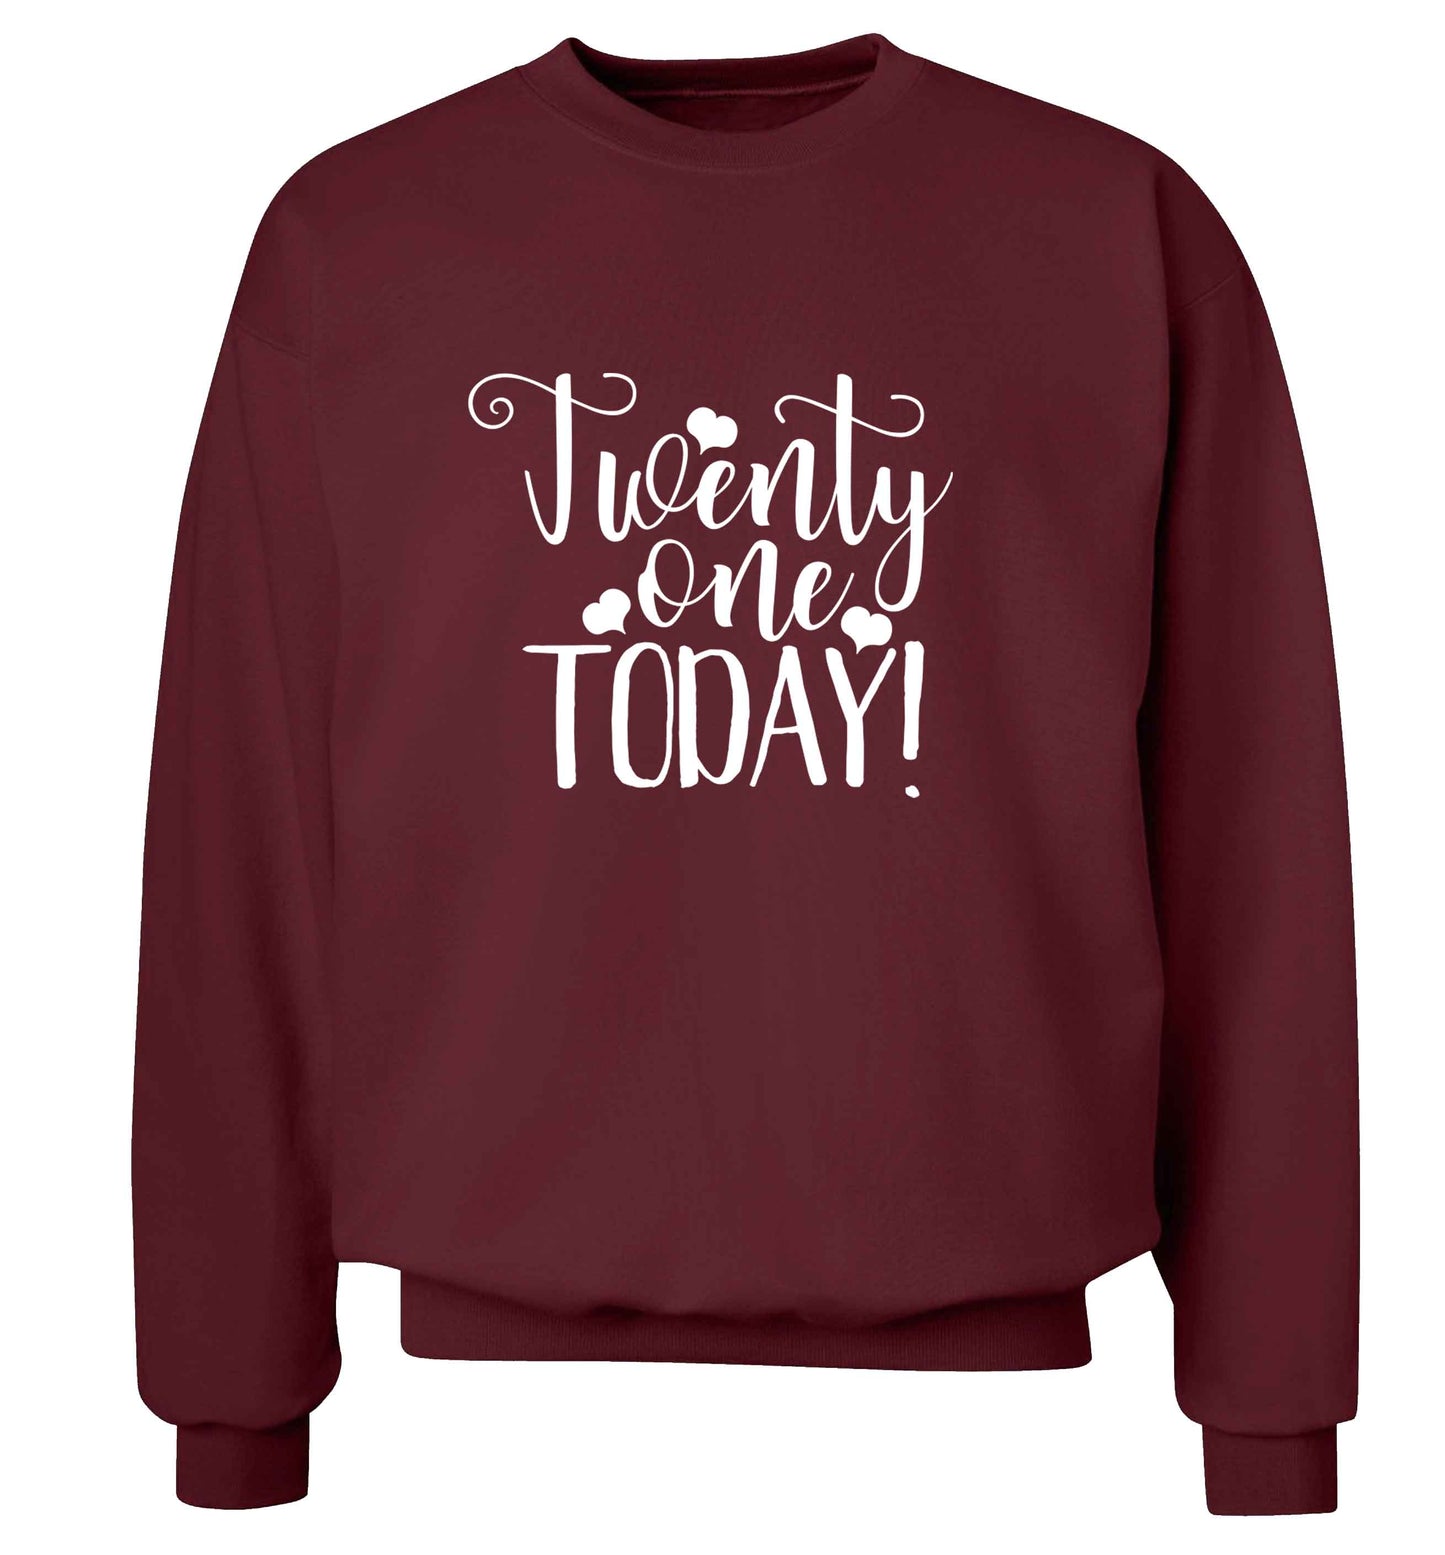 Twenty one today!adult's unisex maroon sweater 2XL